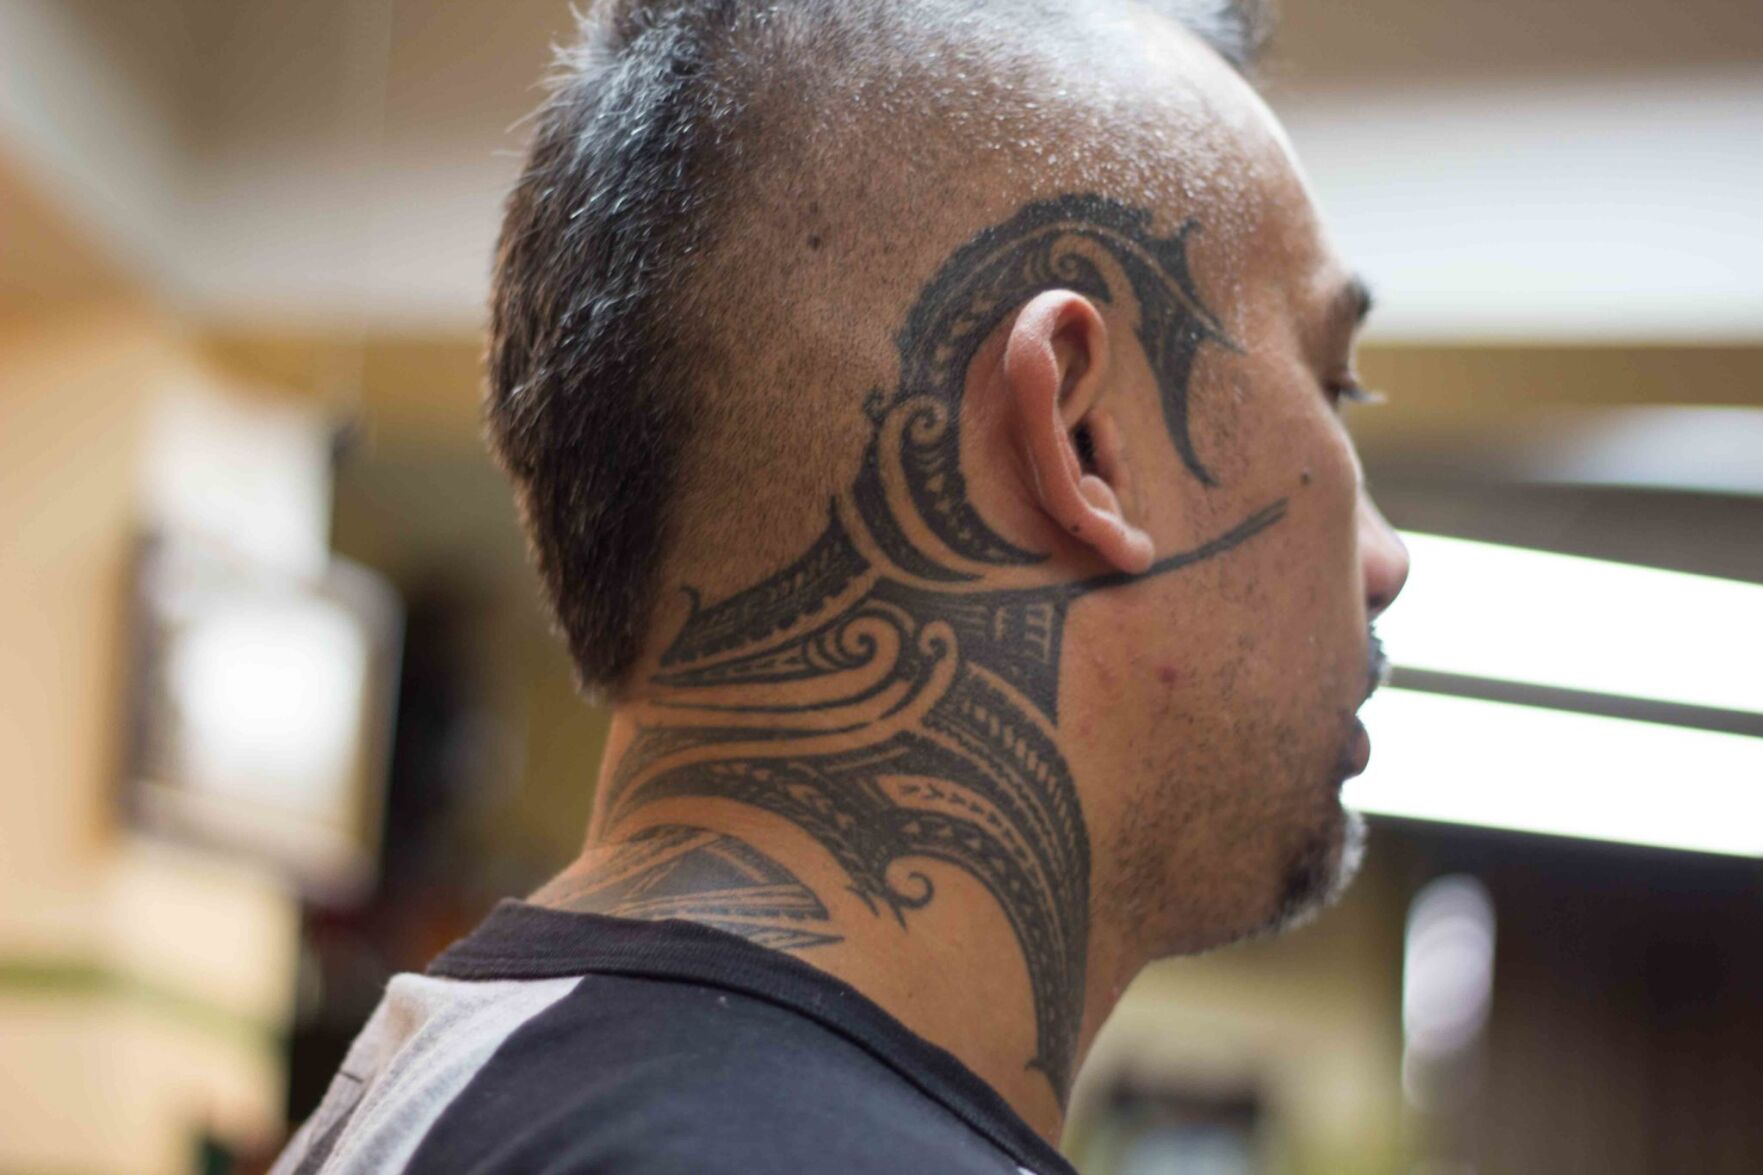 Simple dragon tattoo behind the ear by Brenda Kaye : Tattoos